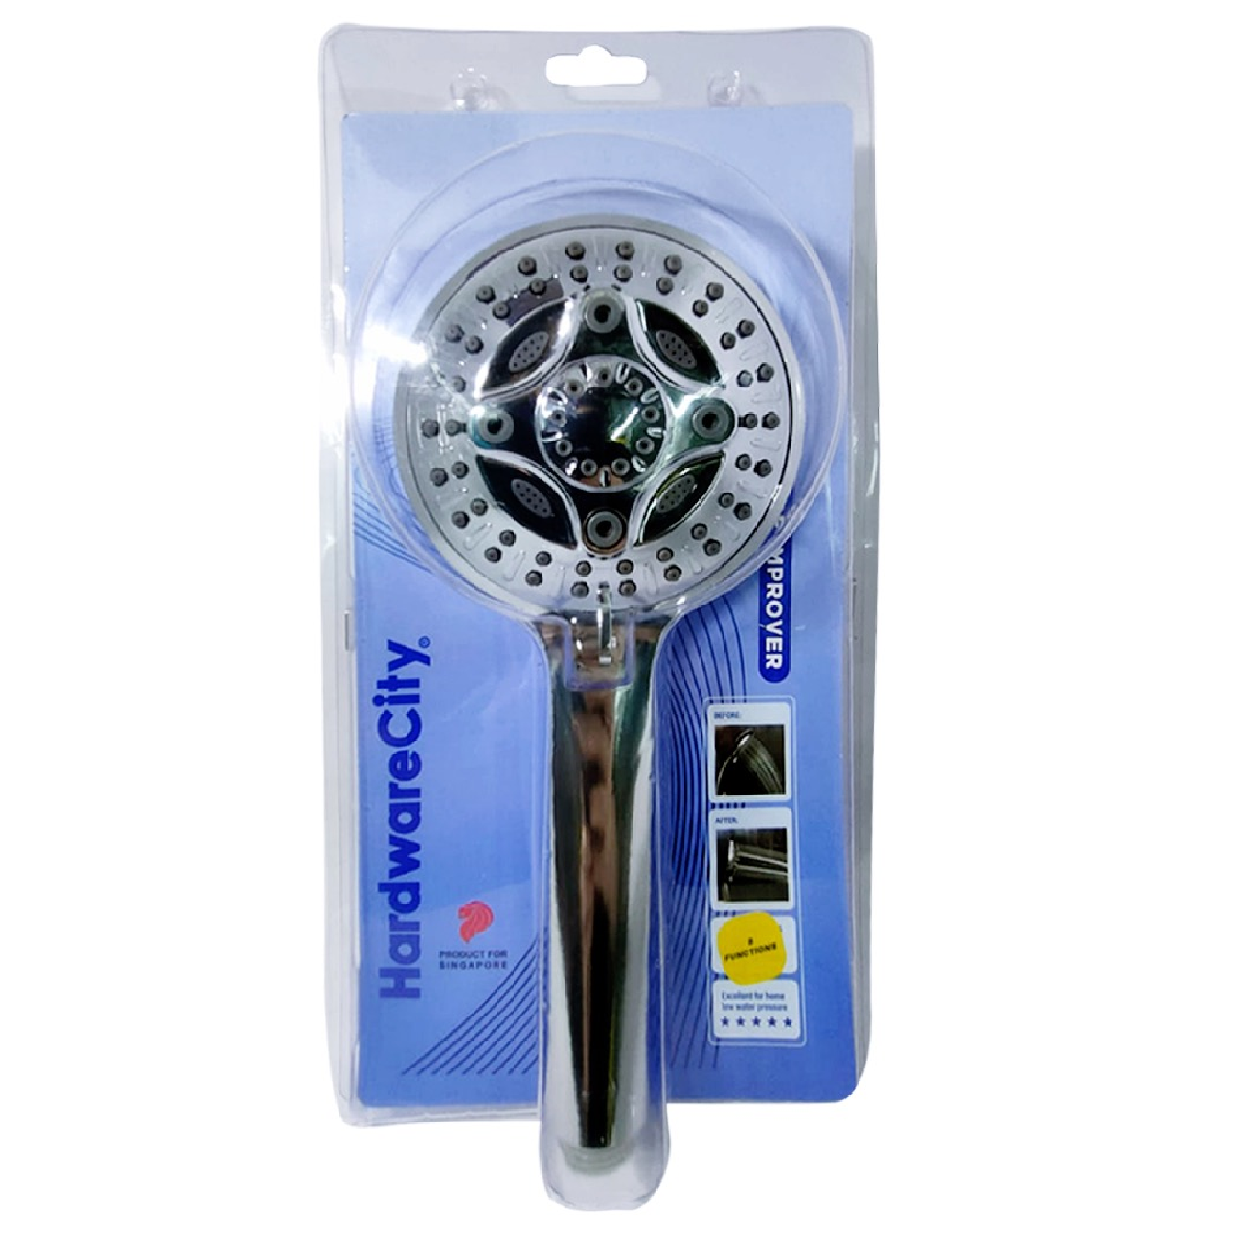 PRESSURE BOOSTER 42878 Premium Shower Head 8 Functions By HardwareCity